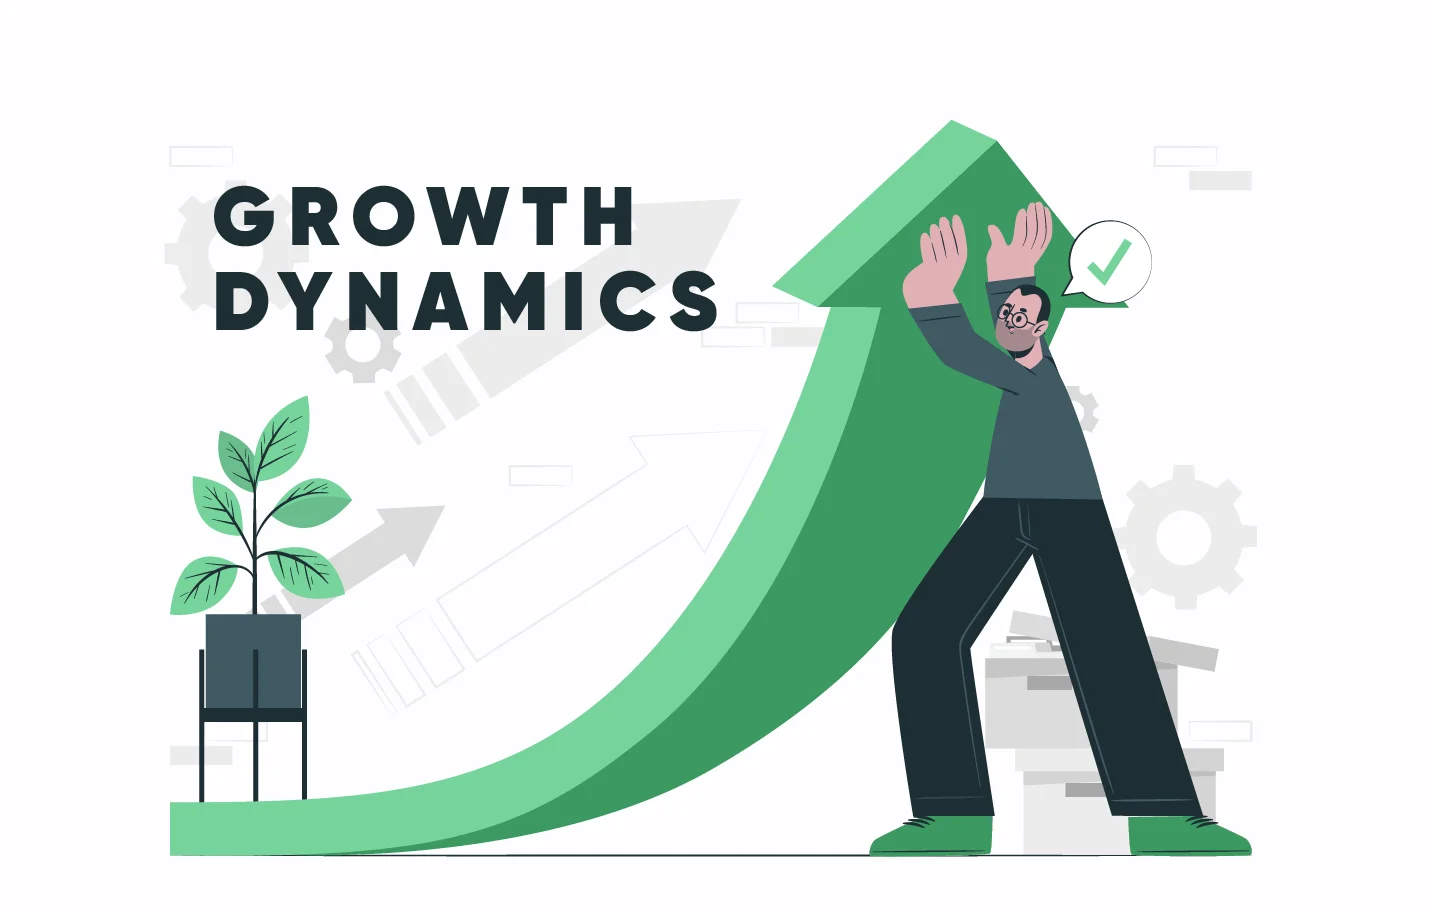 edx. Growth Dynamics